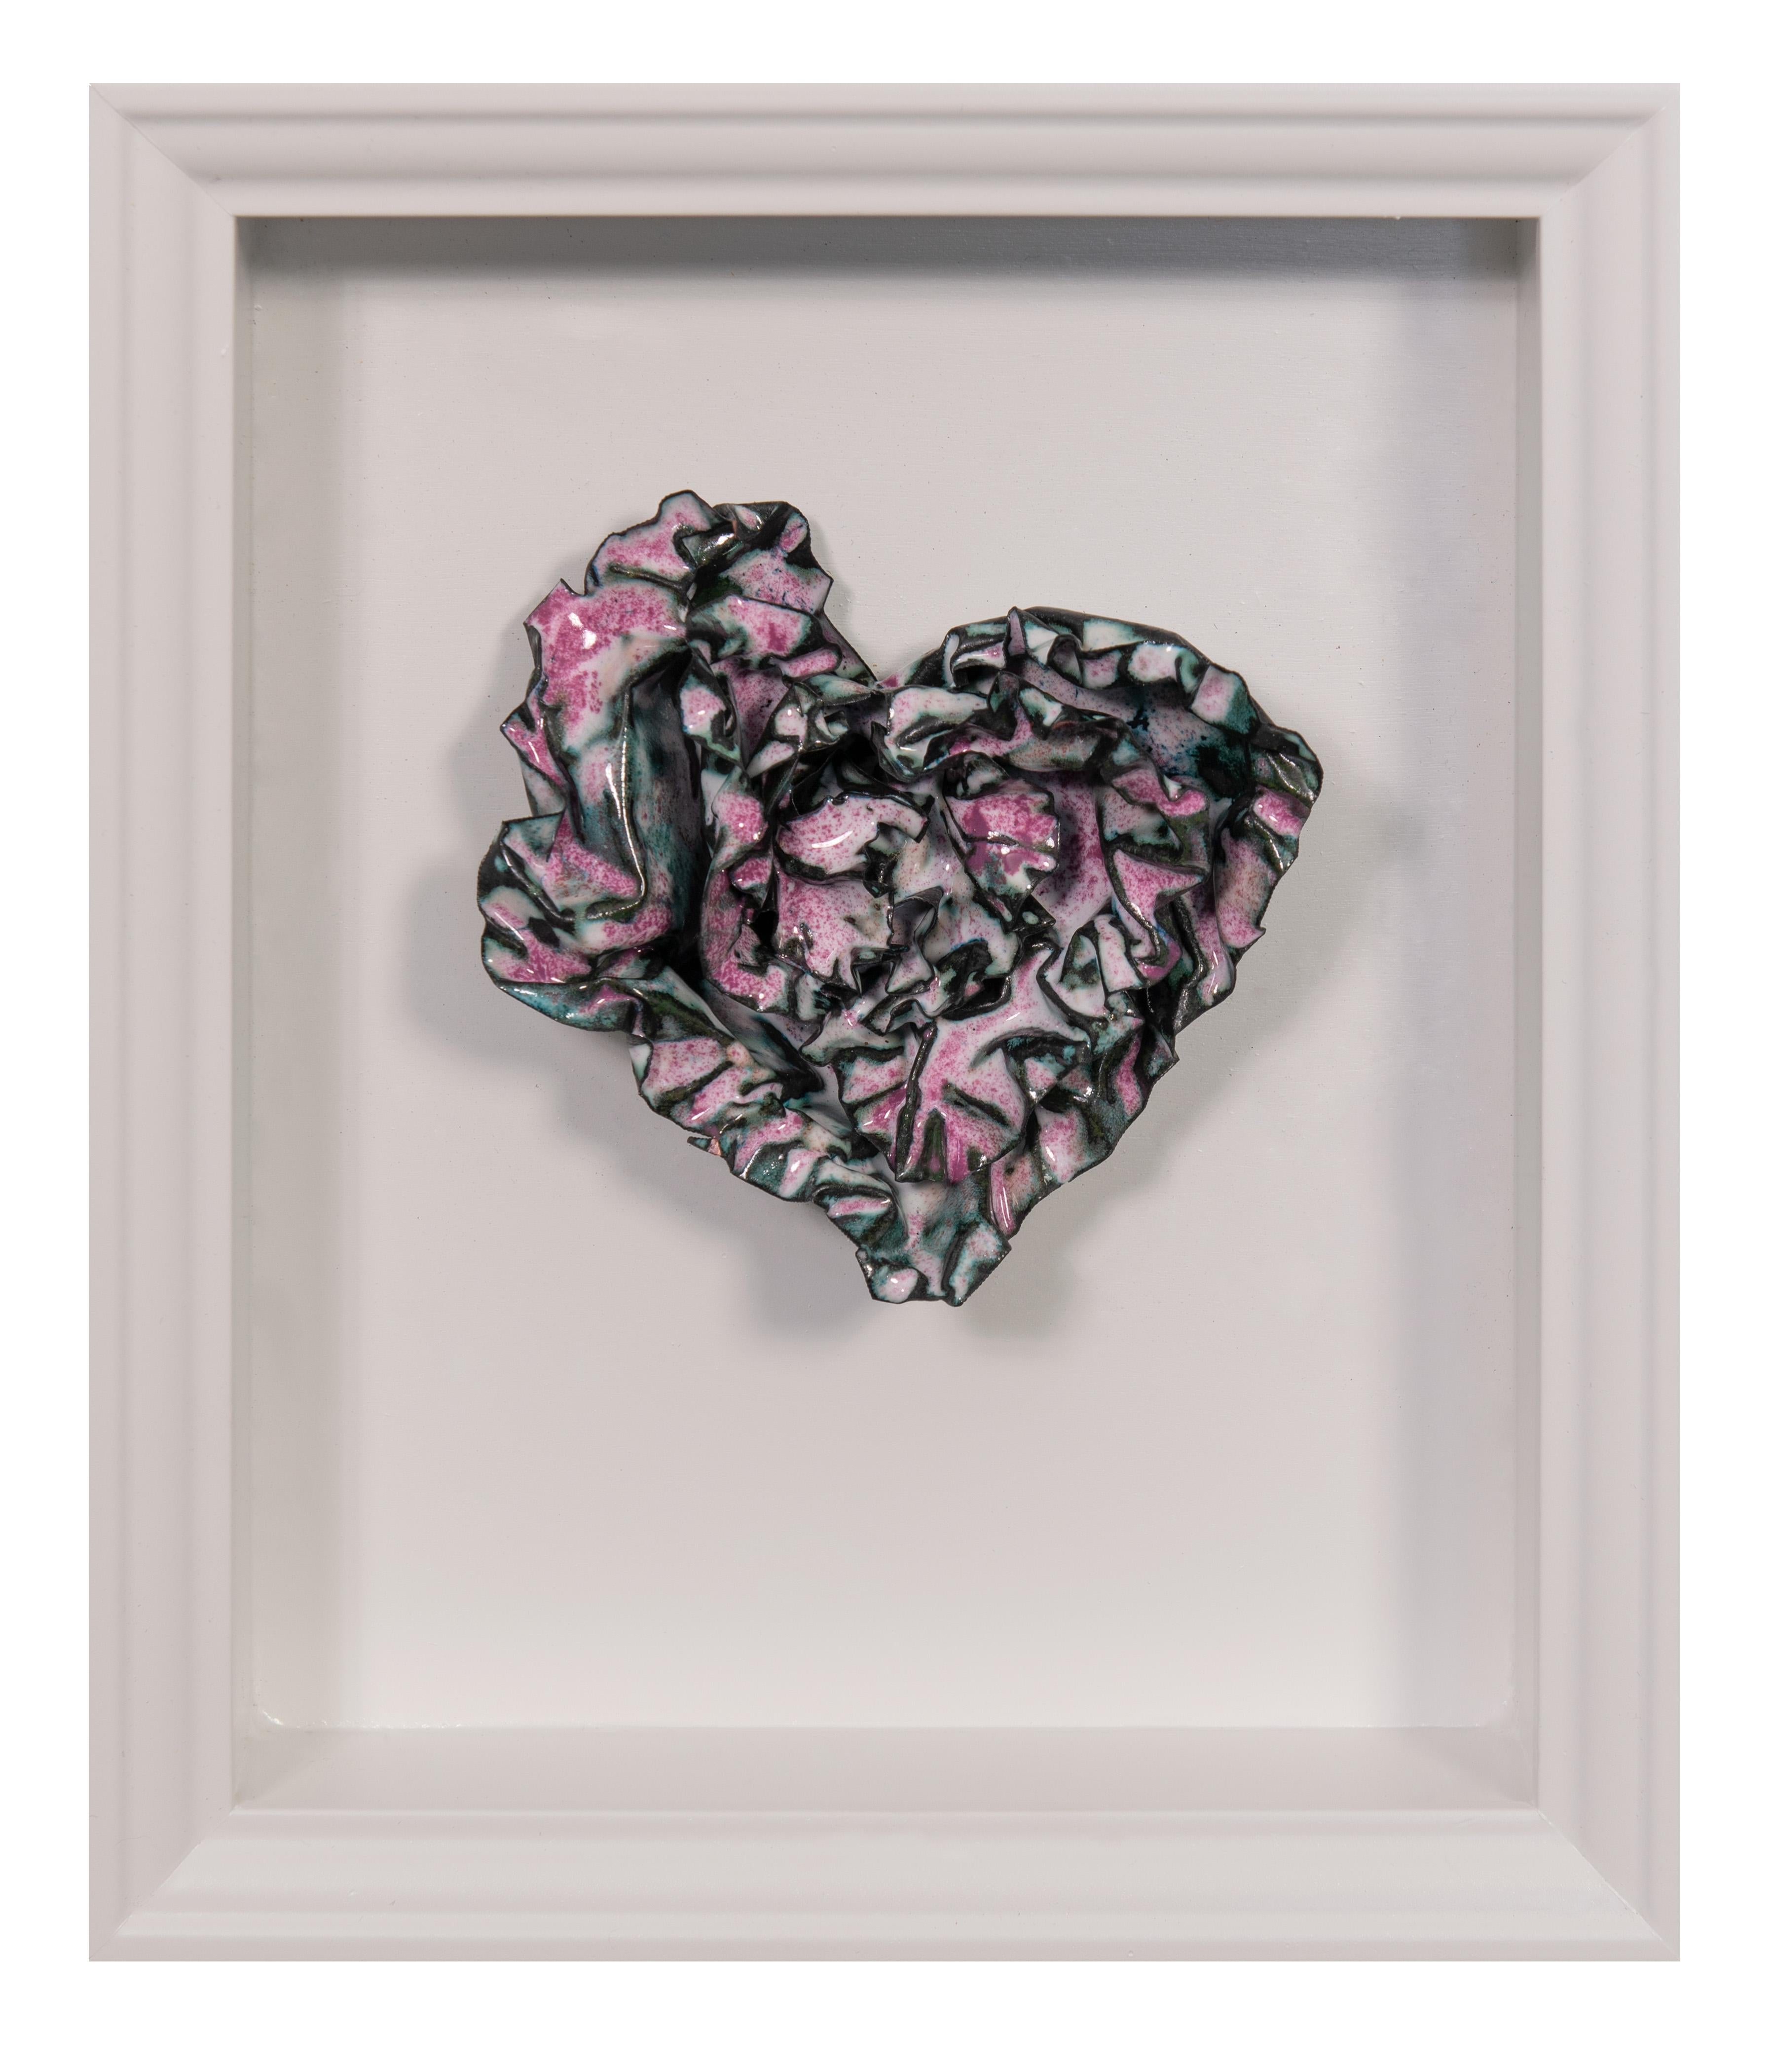 Sherry Been Abstract Sculpture - "Speckled Heart" Abstract Wall Art Sculpture, 2024